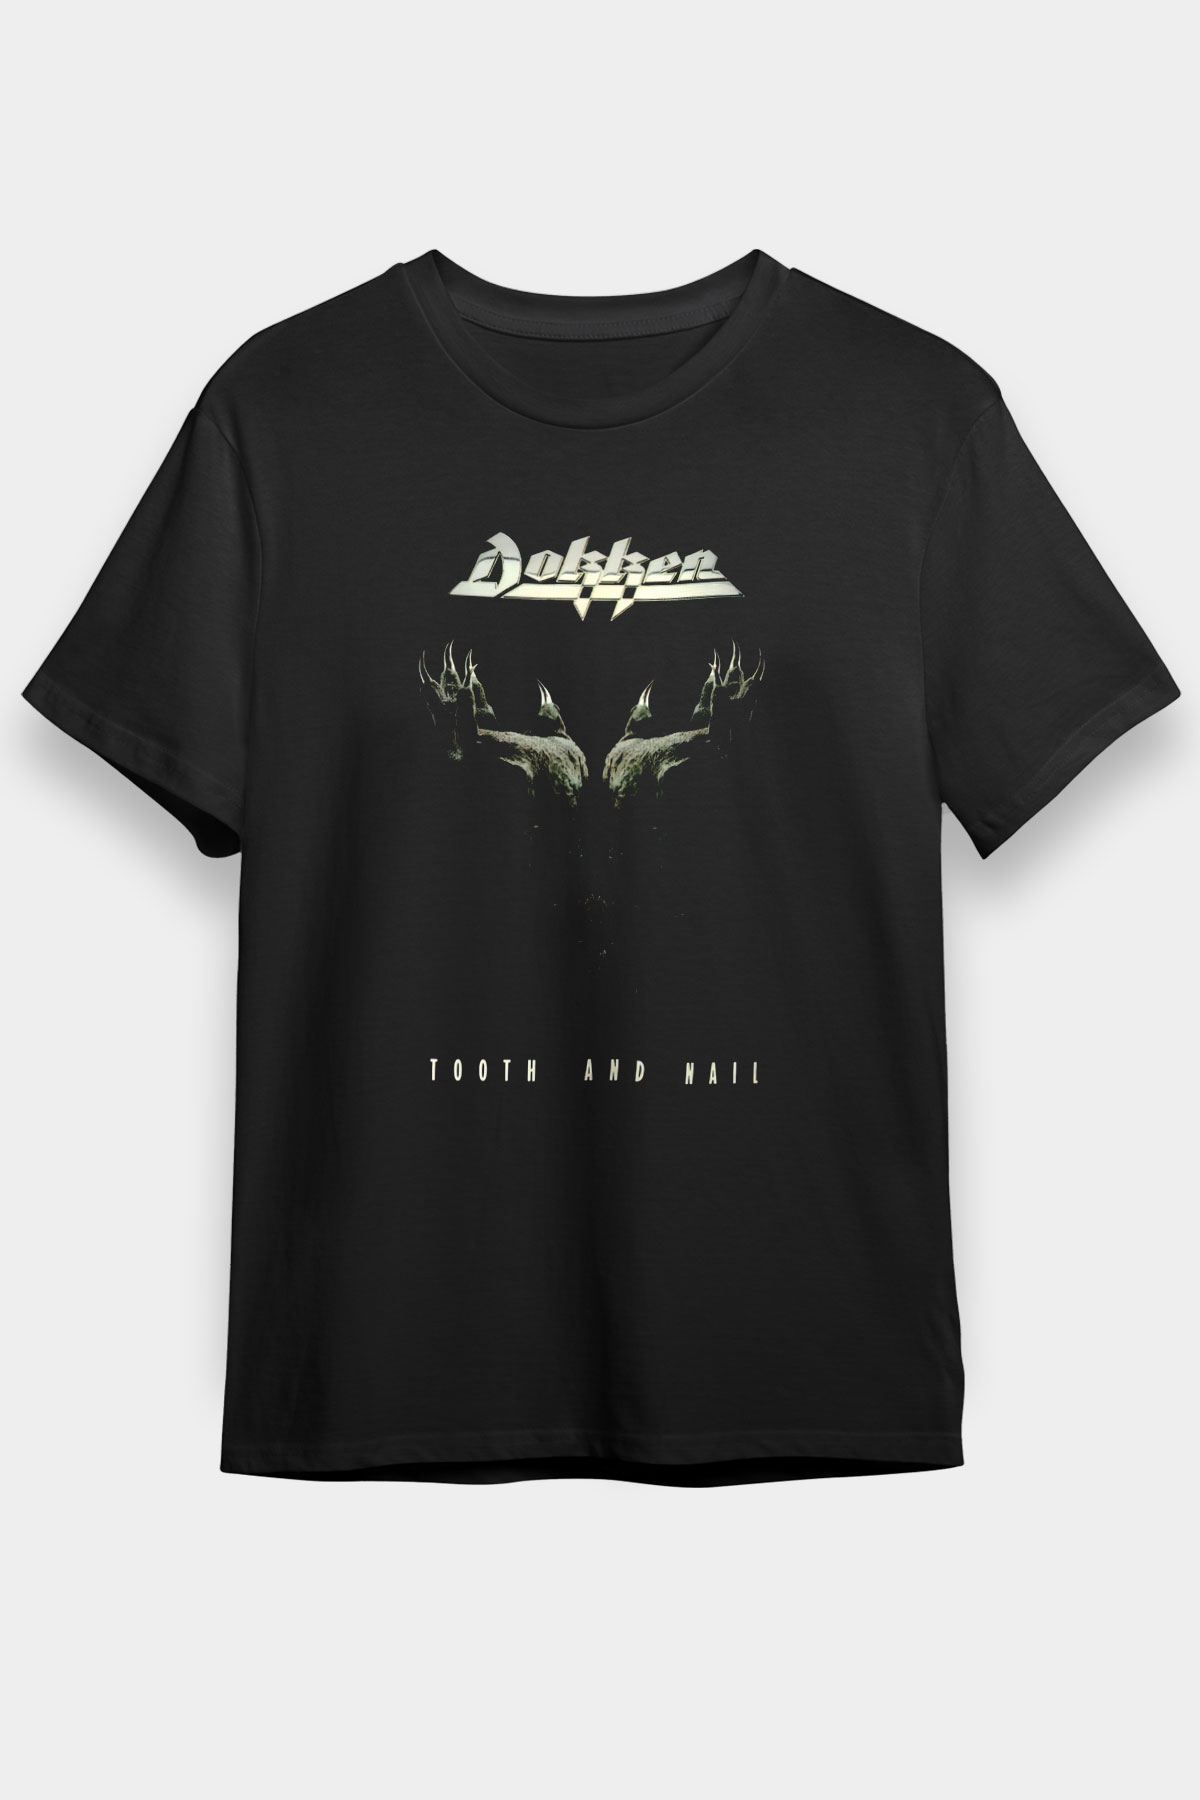 Dokken  T shirt,Music Band,Unisex Tshirt 21